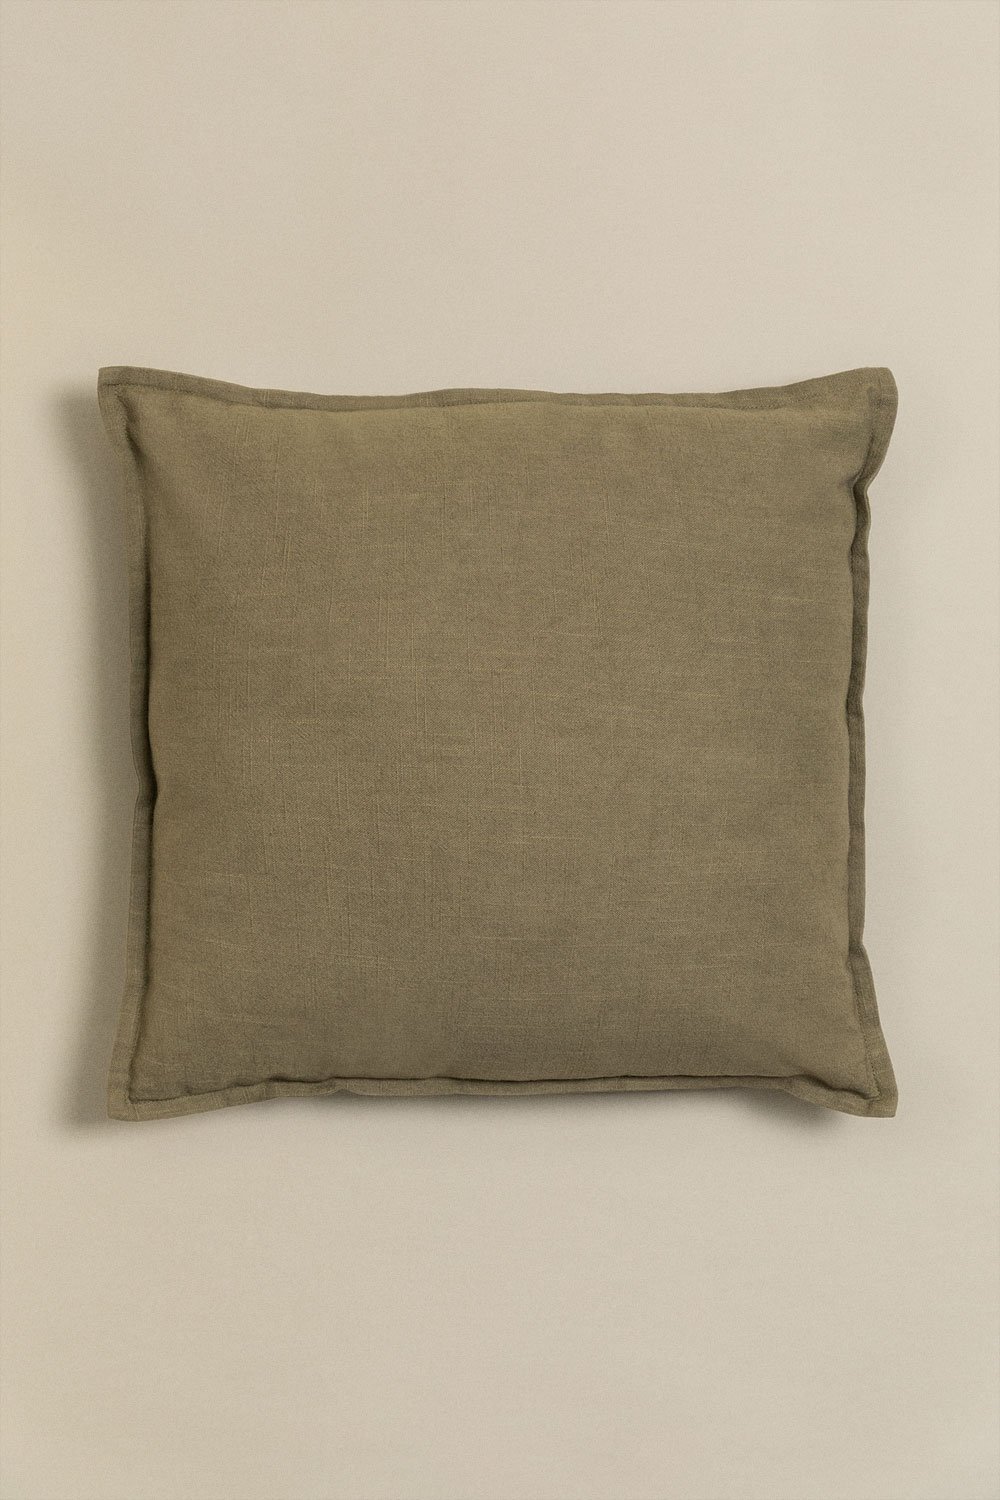 Square Cotton Cushion (45x45 cm) Elezar, gallery image 1